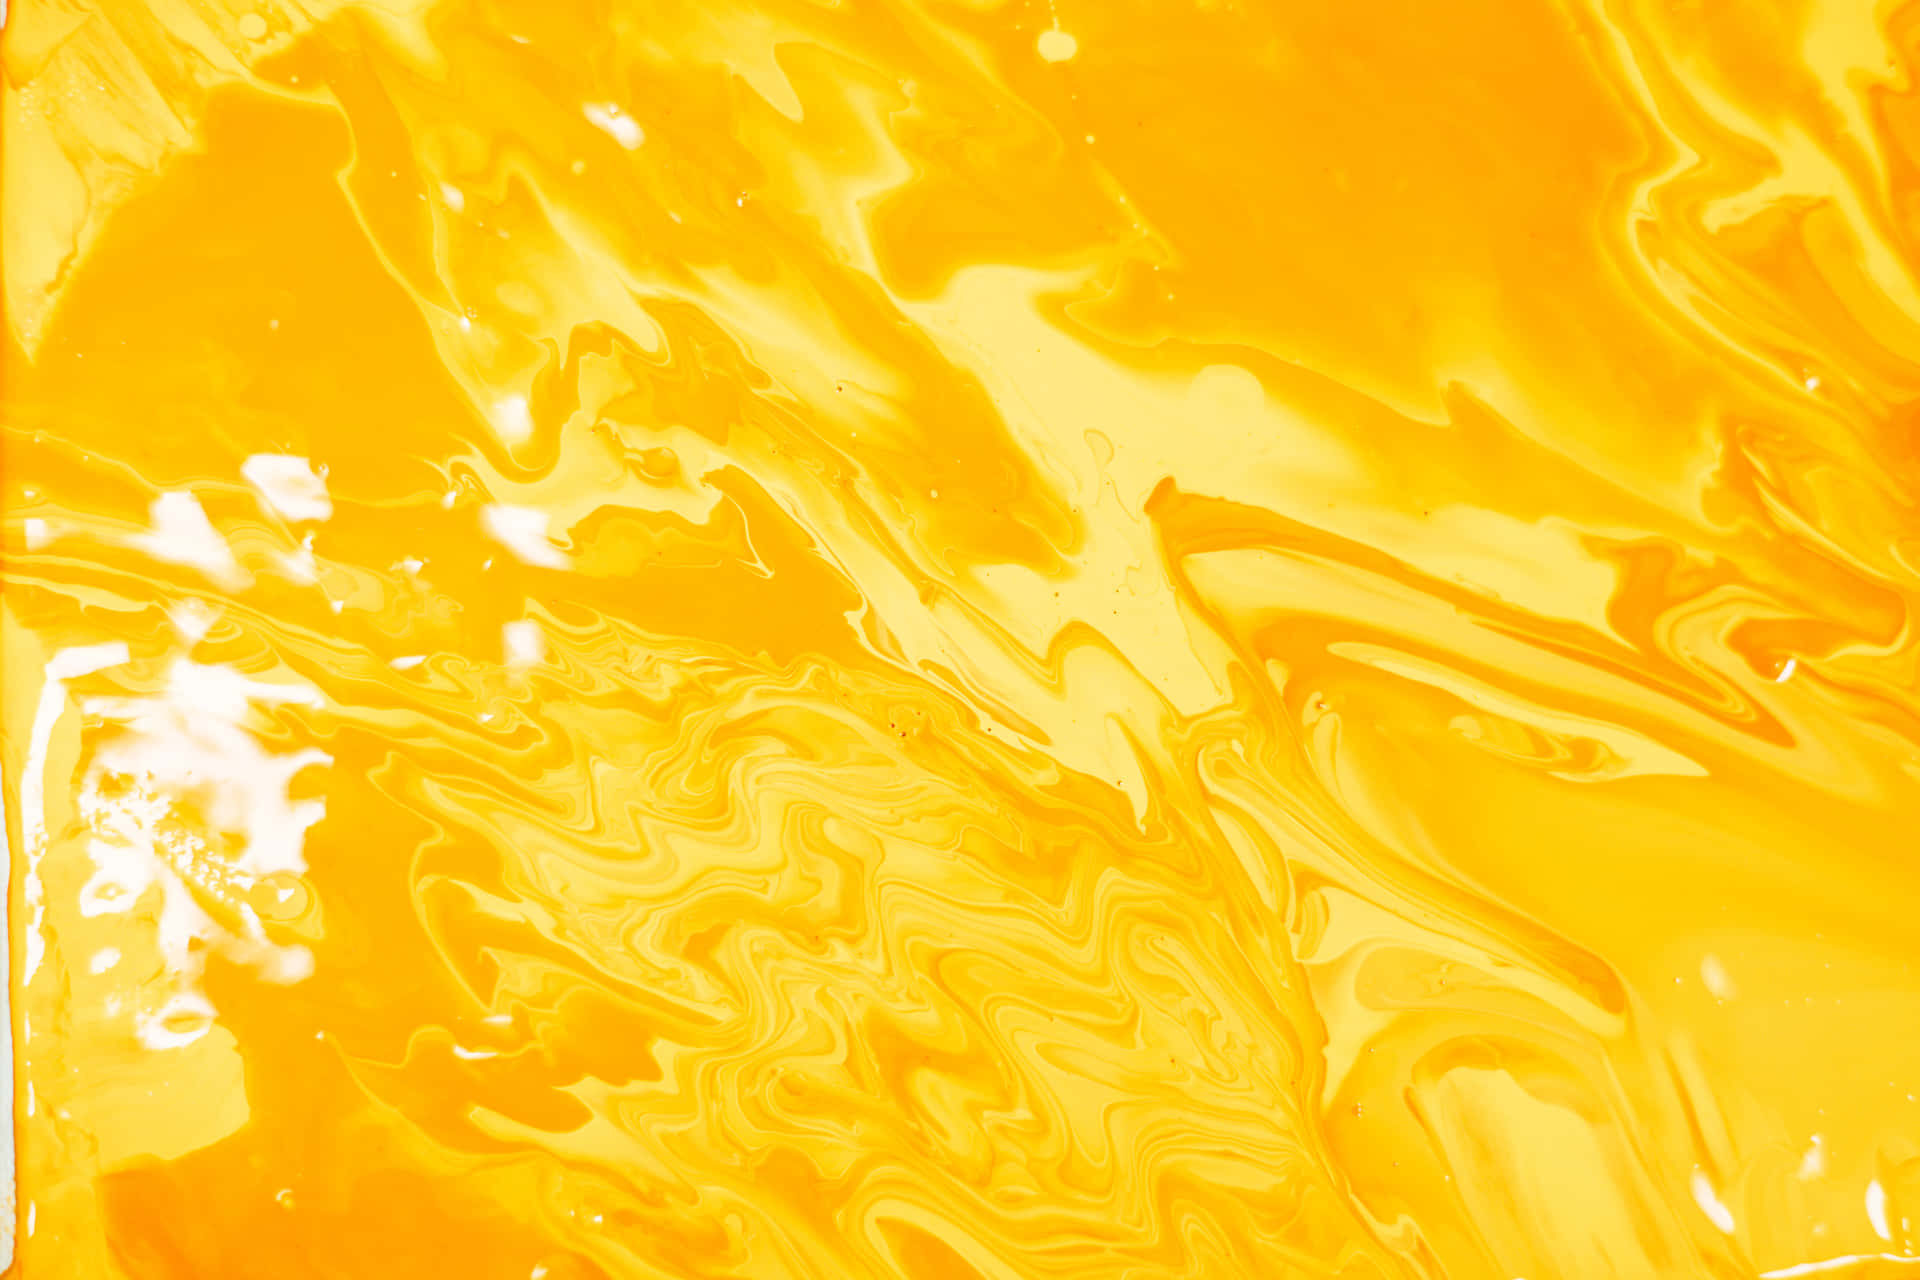 A Yellow Liquid